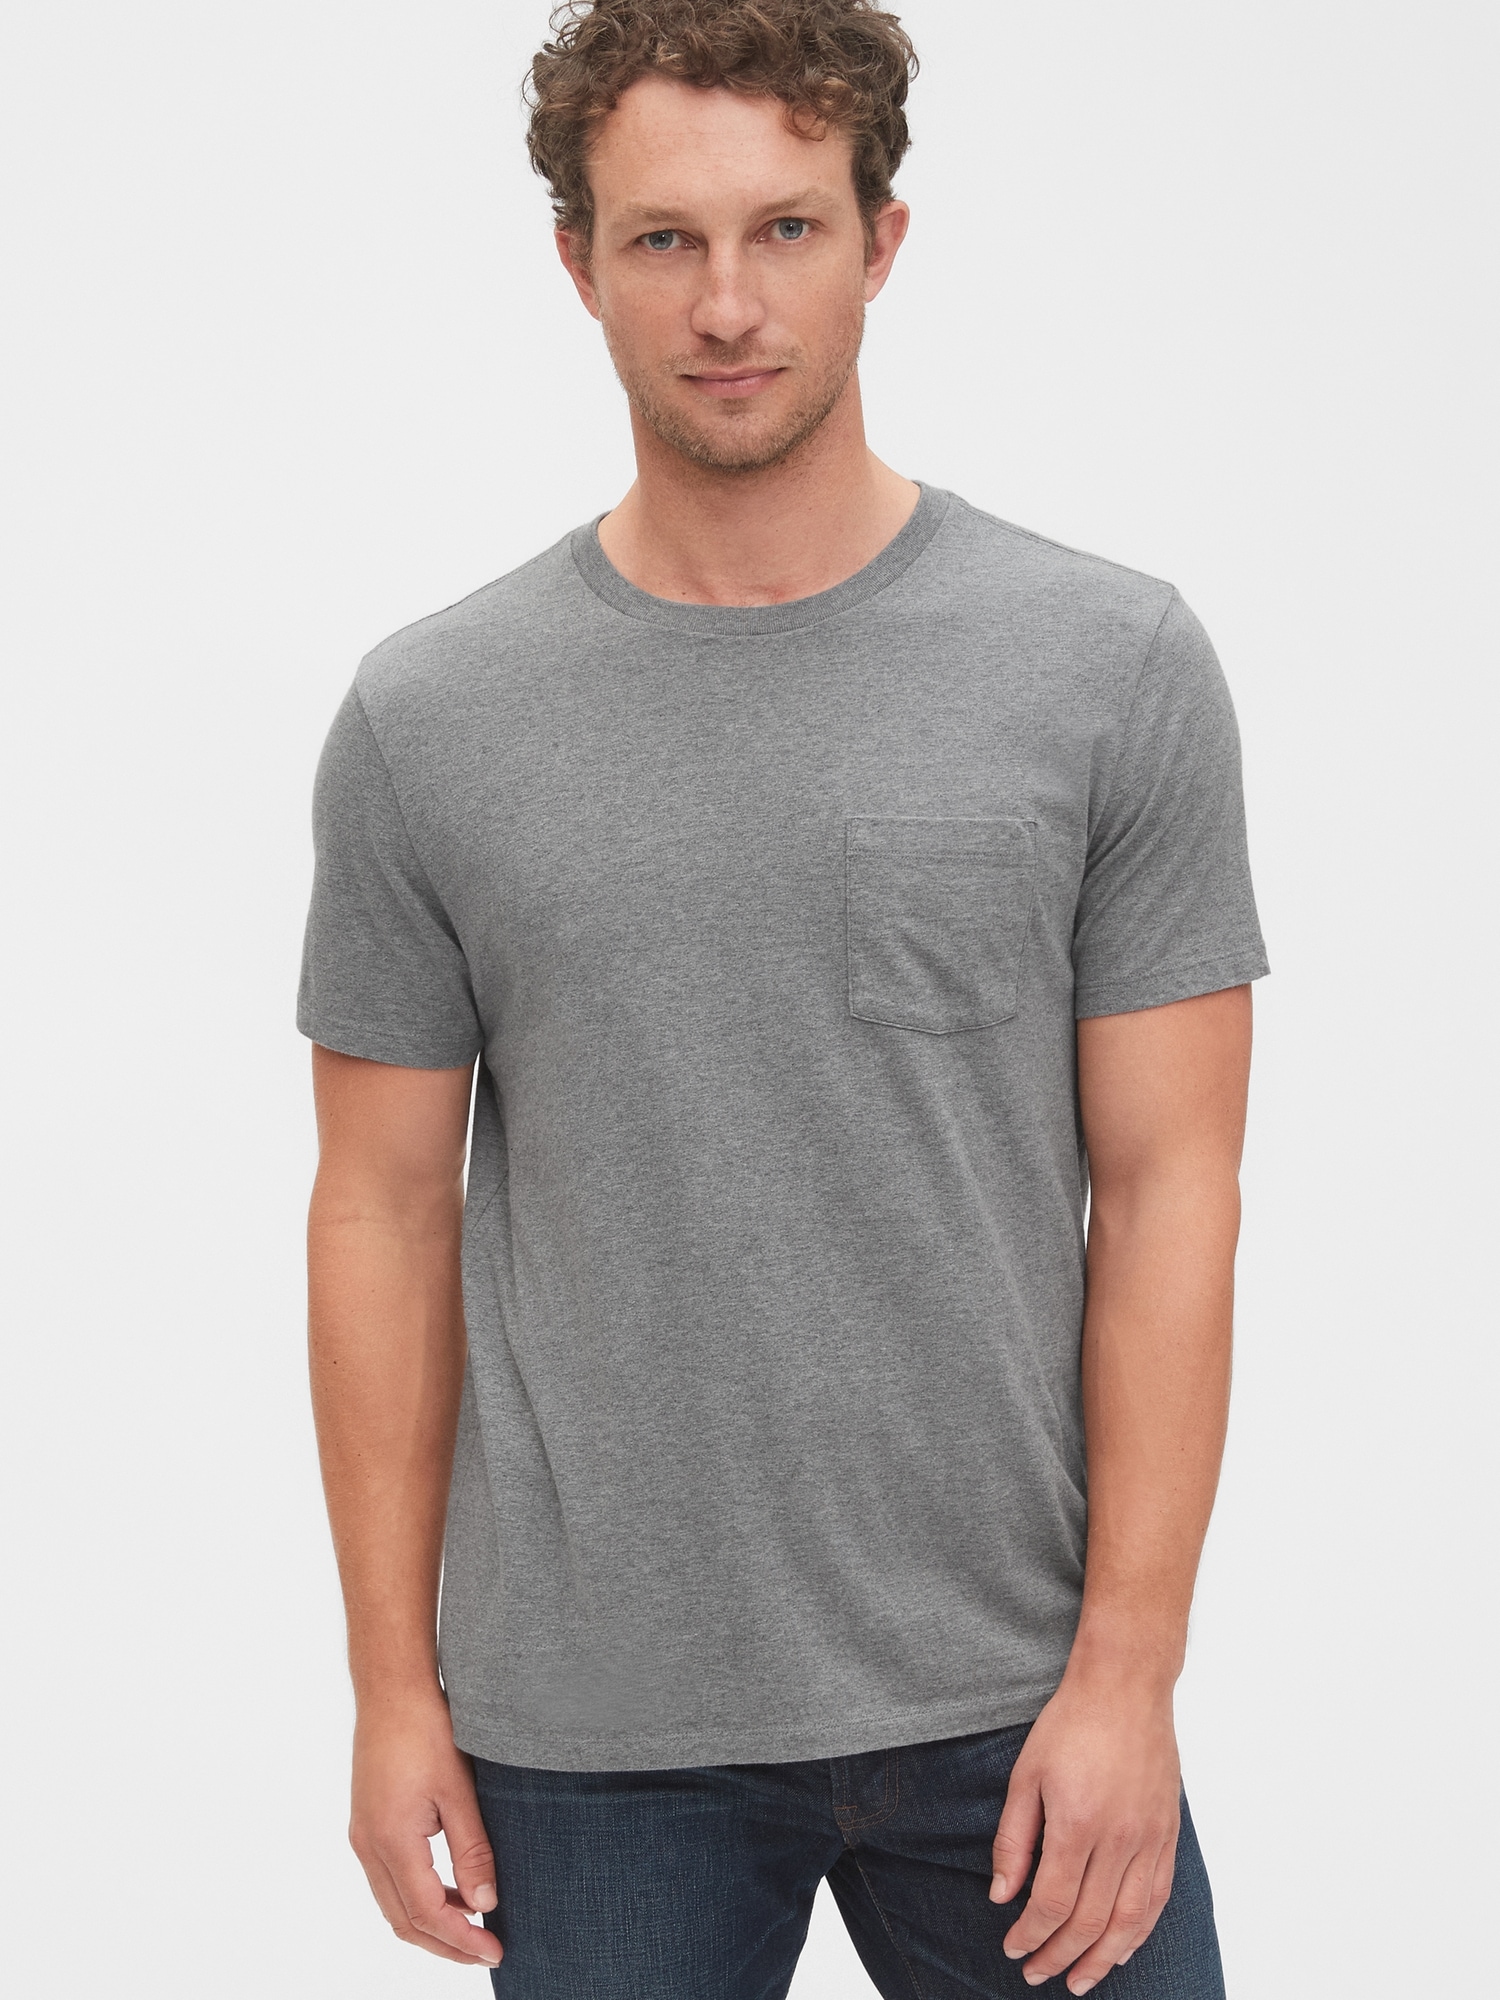 Black Pocket T-Shirt For Men